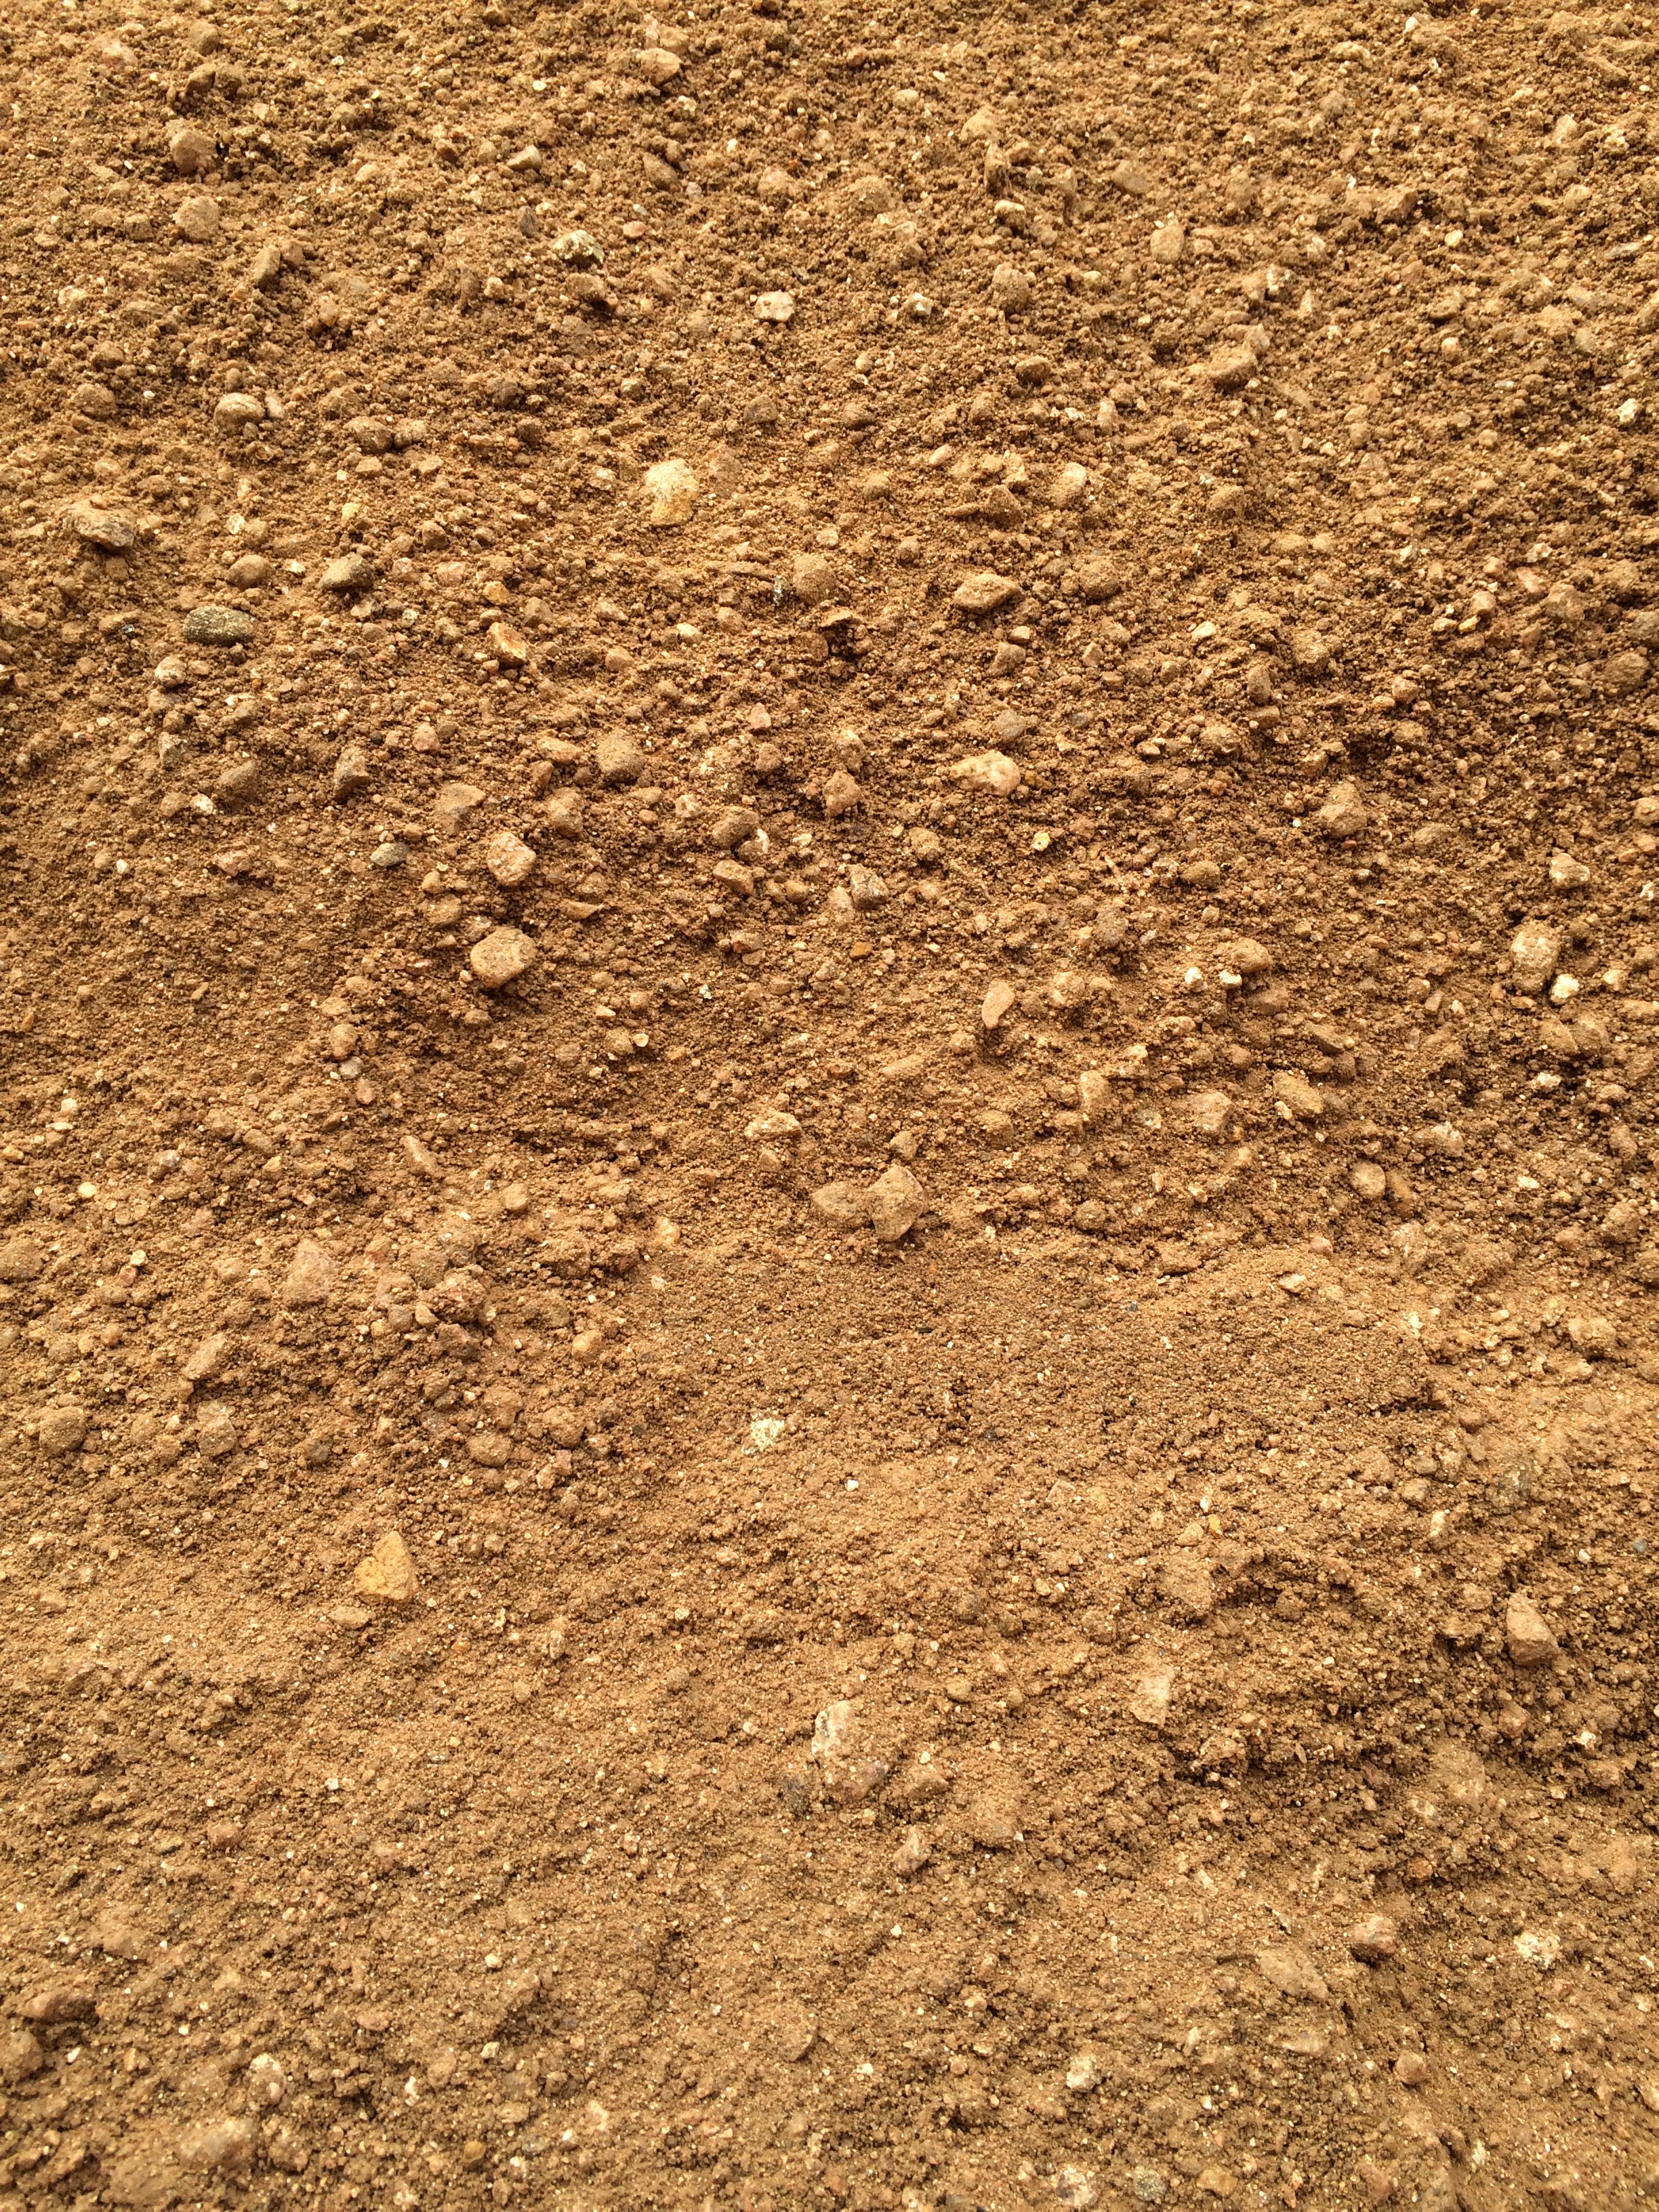 santa fe brown crusher fines | Albert Montano Sand and Gravel